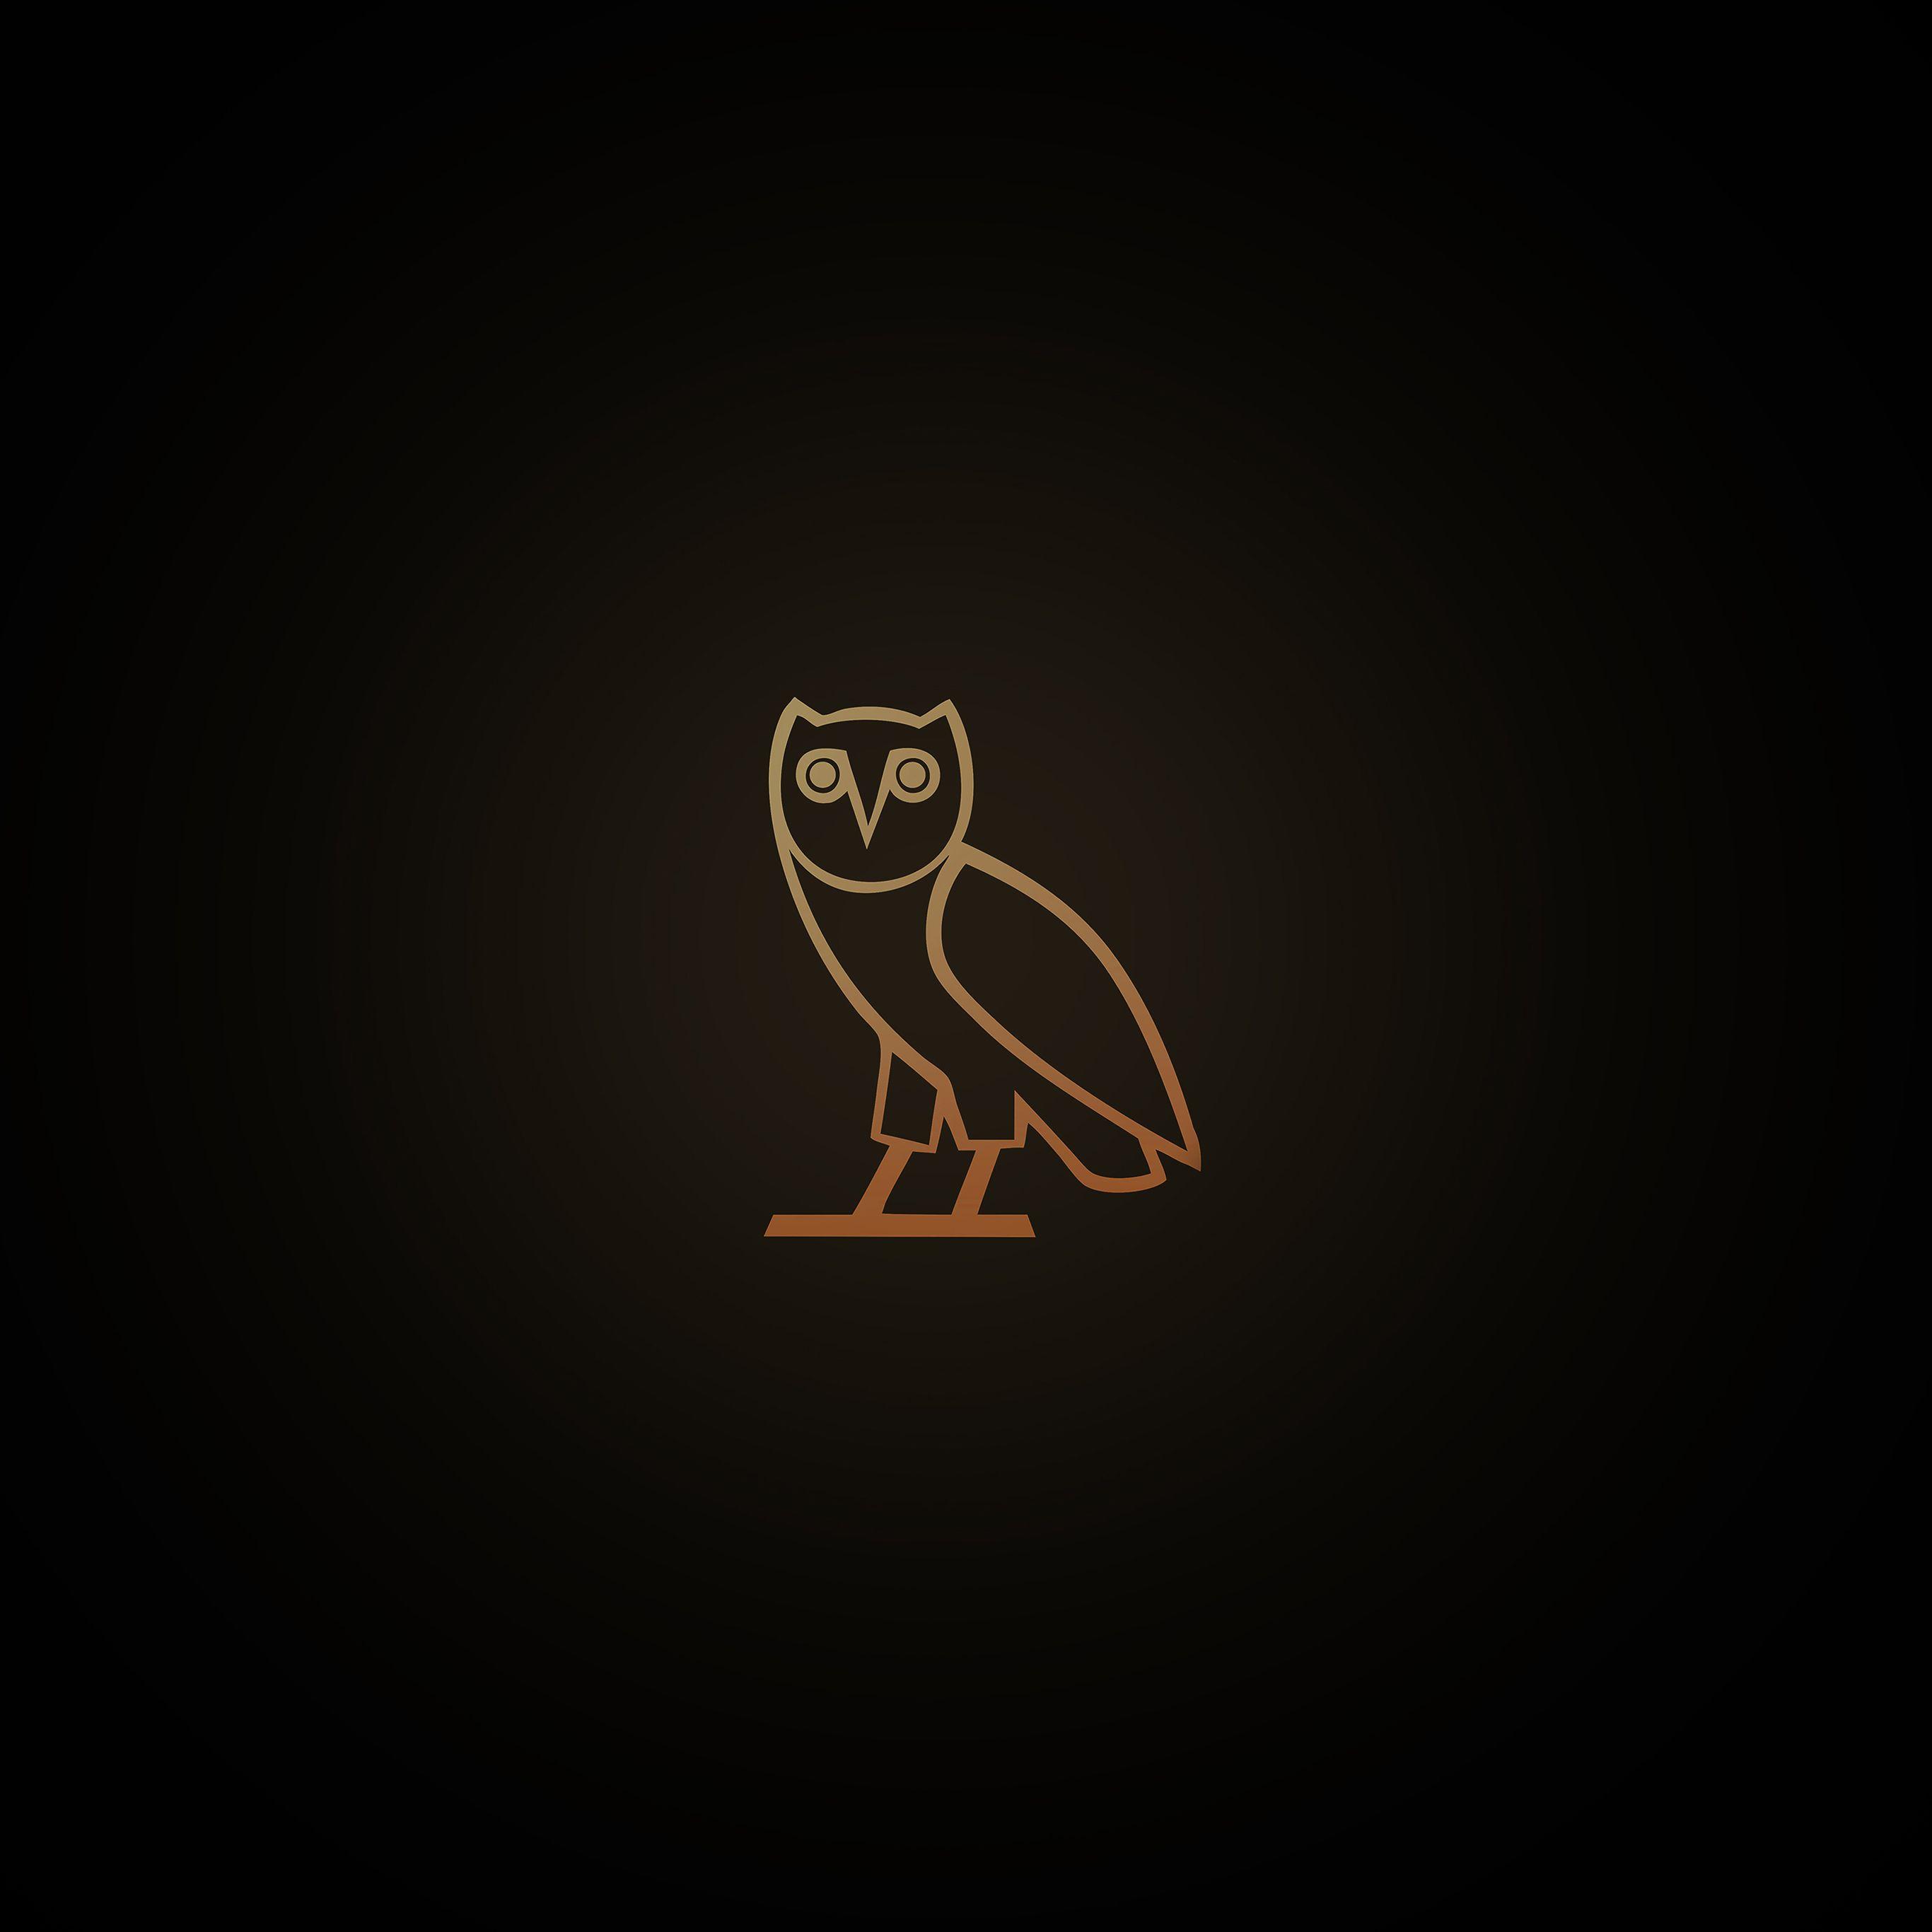 Wallpaper Ovo Owl Logo Dark Minimal